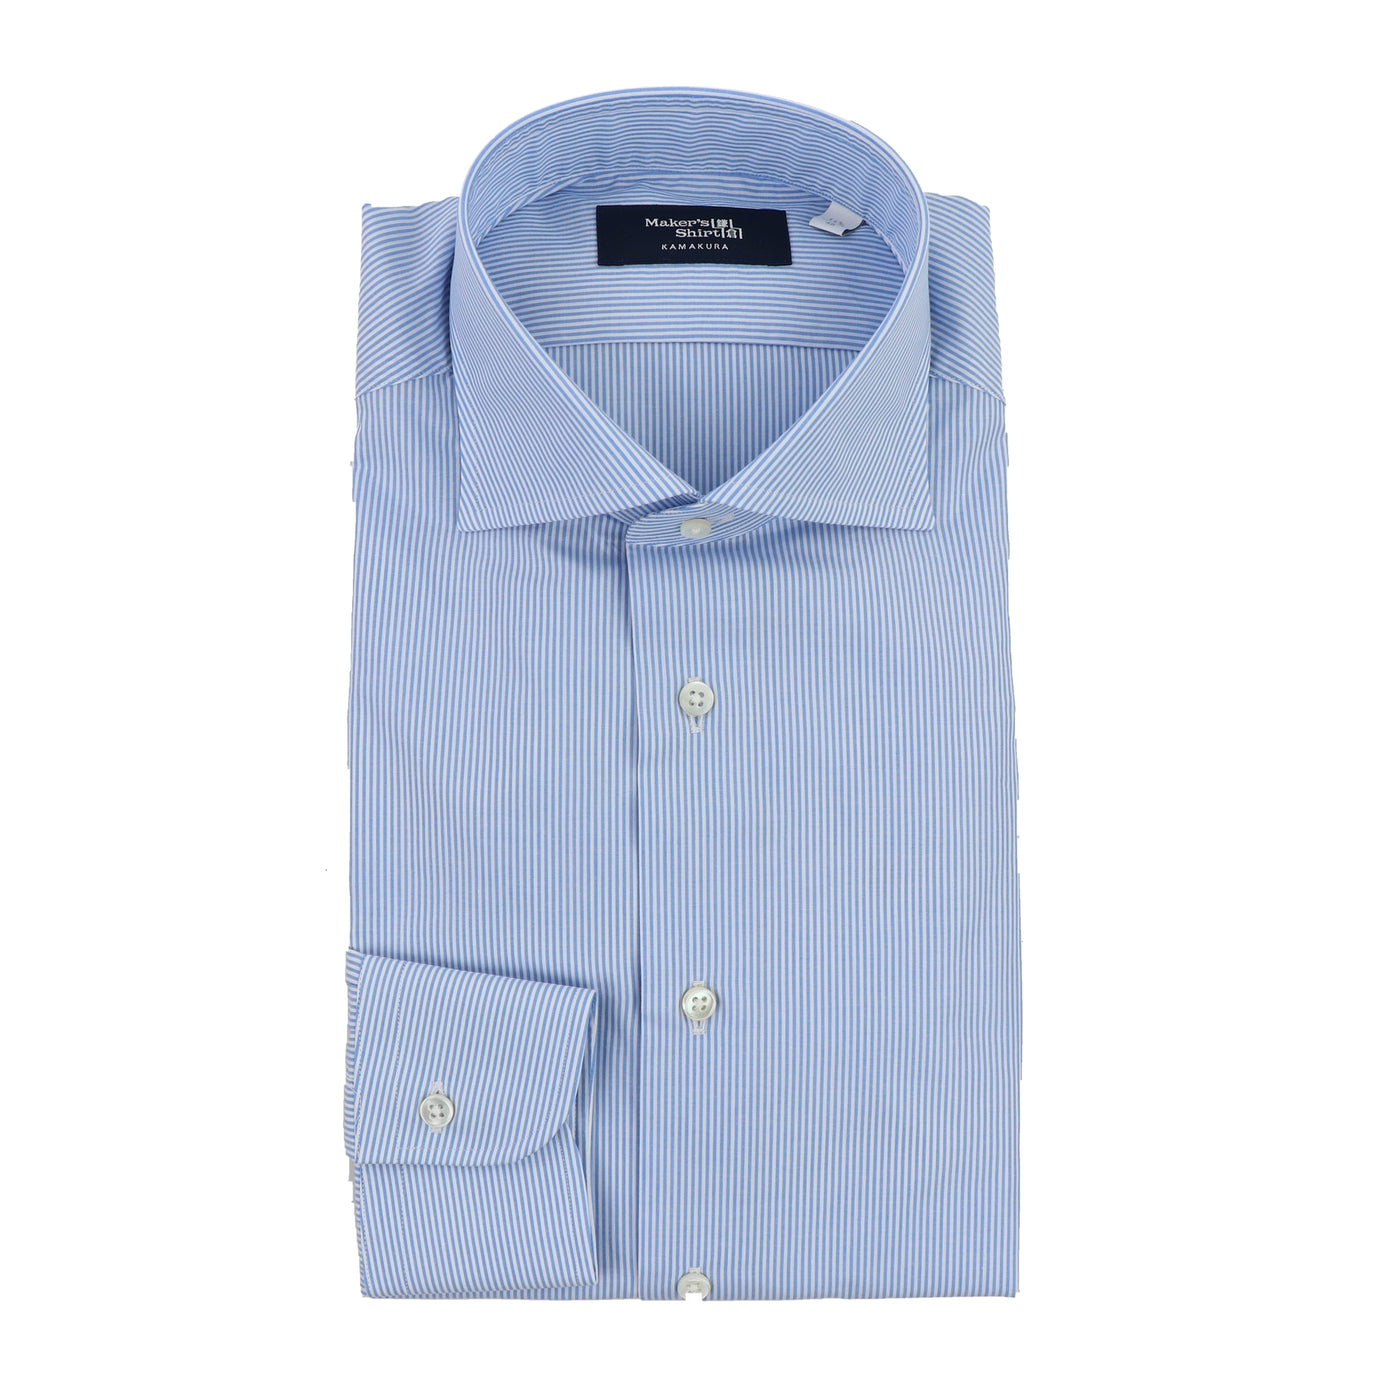 Maker's Premium Dress Shirt in Fine Blue Stripe